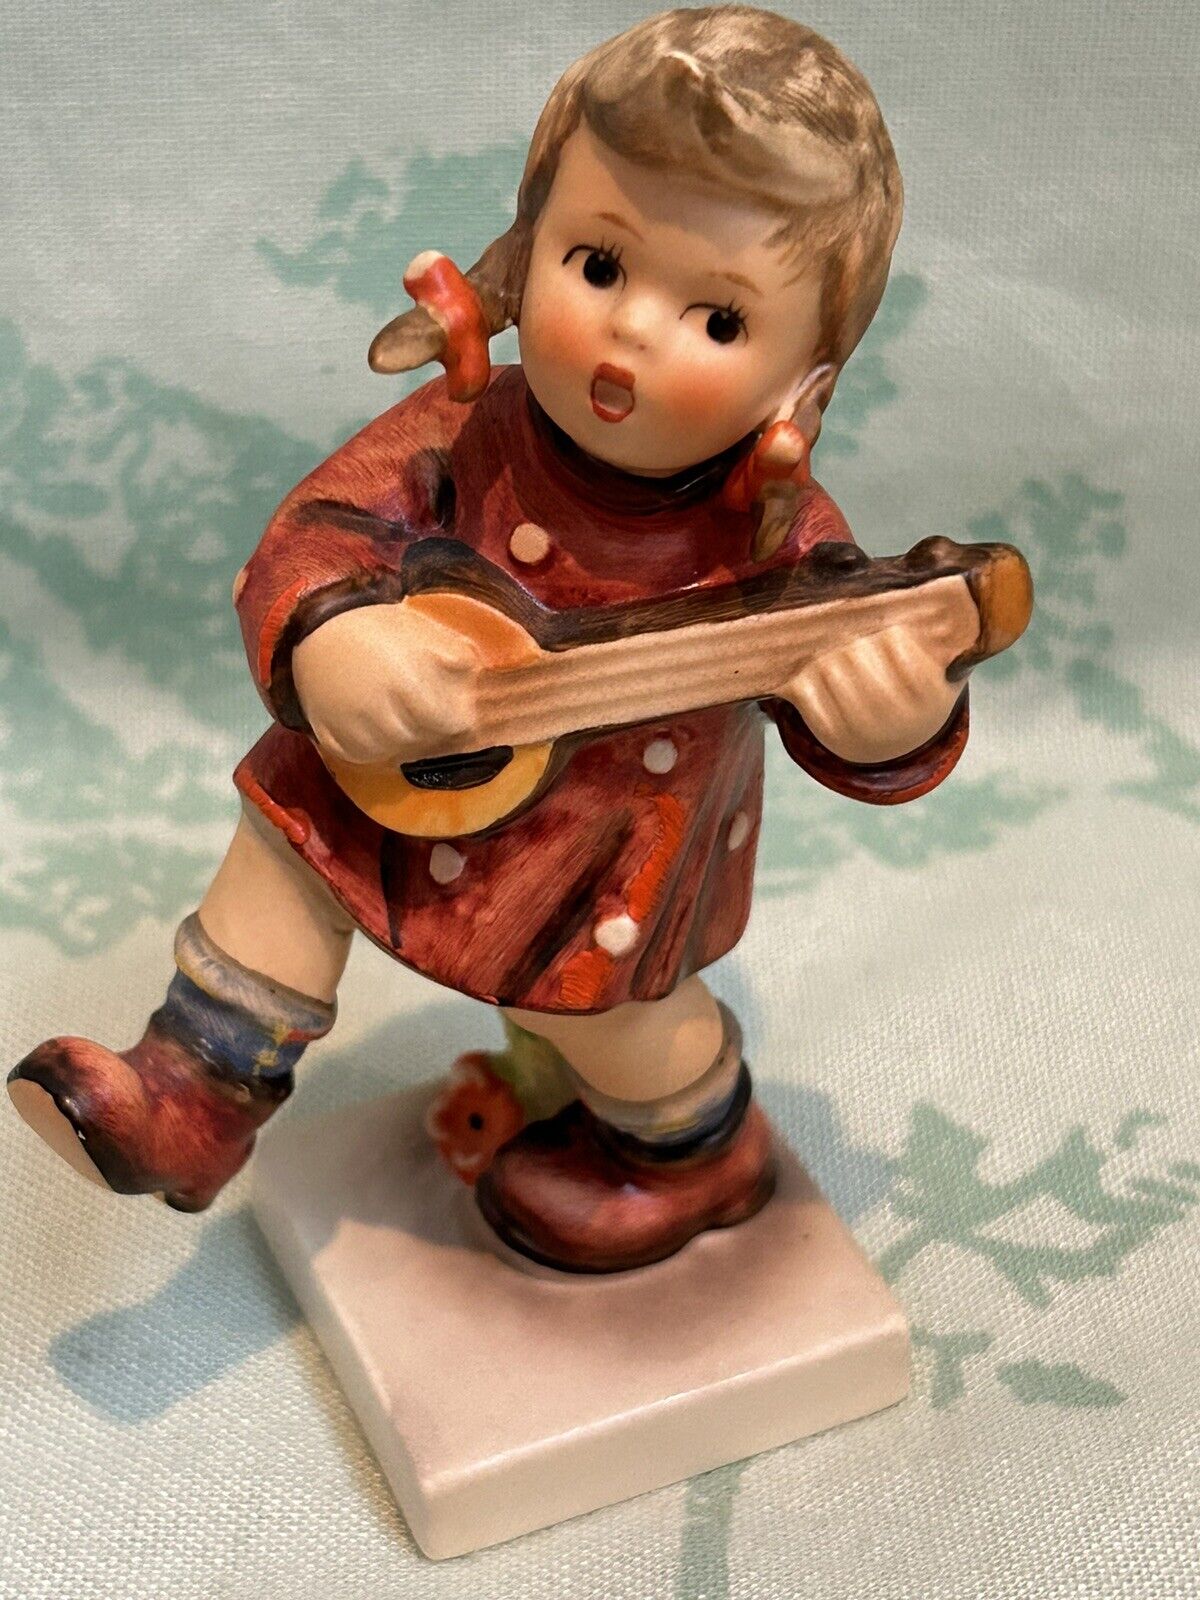 Hummel Vintage “Happiness” Girl w/ Banjo Figurine